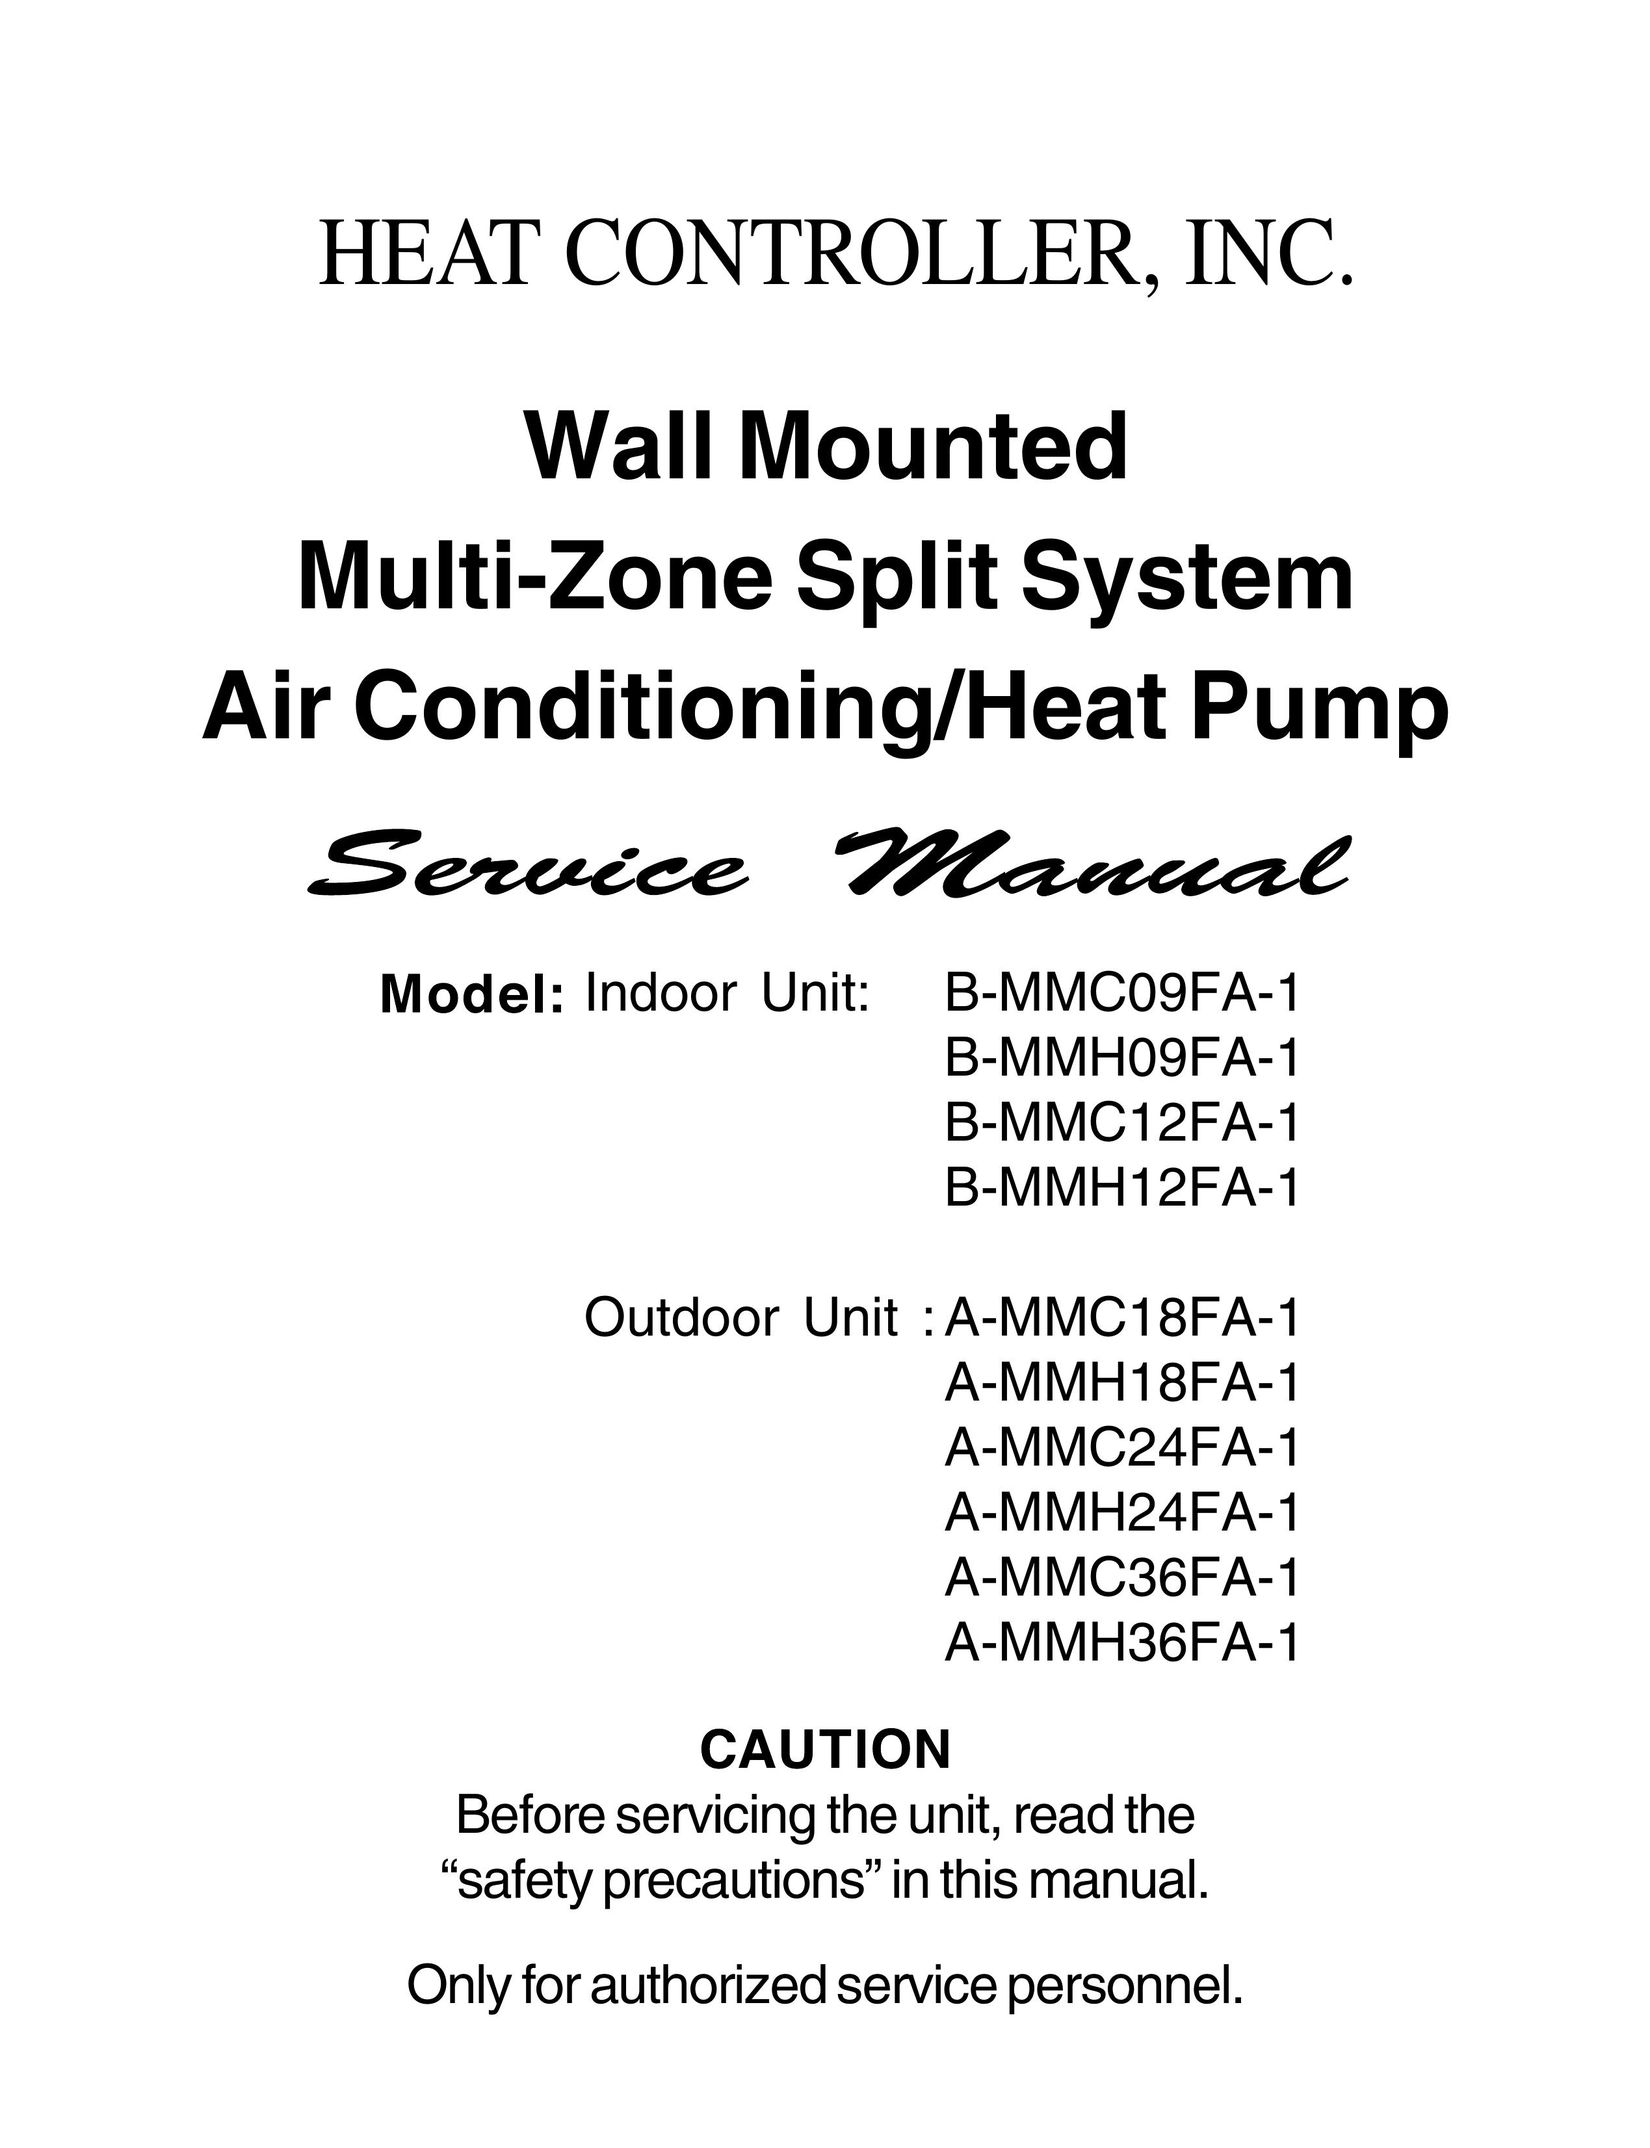 Heat Controller B-MMC12FA-1 Air Conditioner User Manual